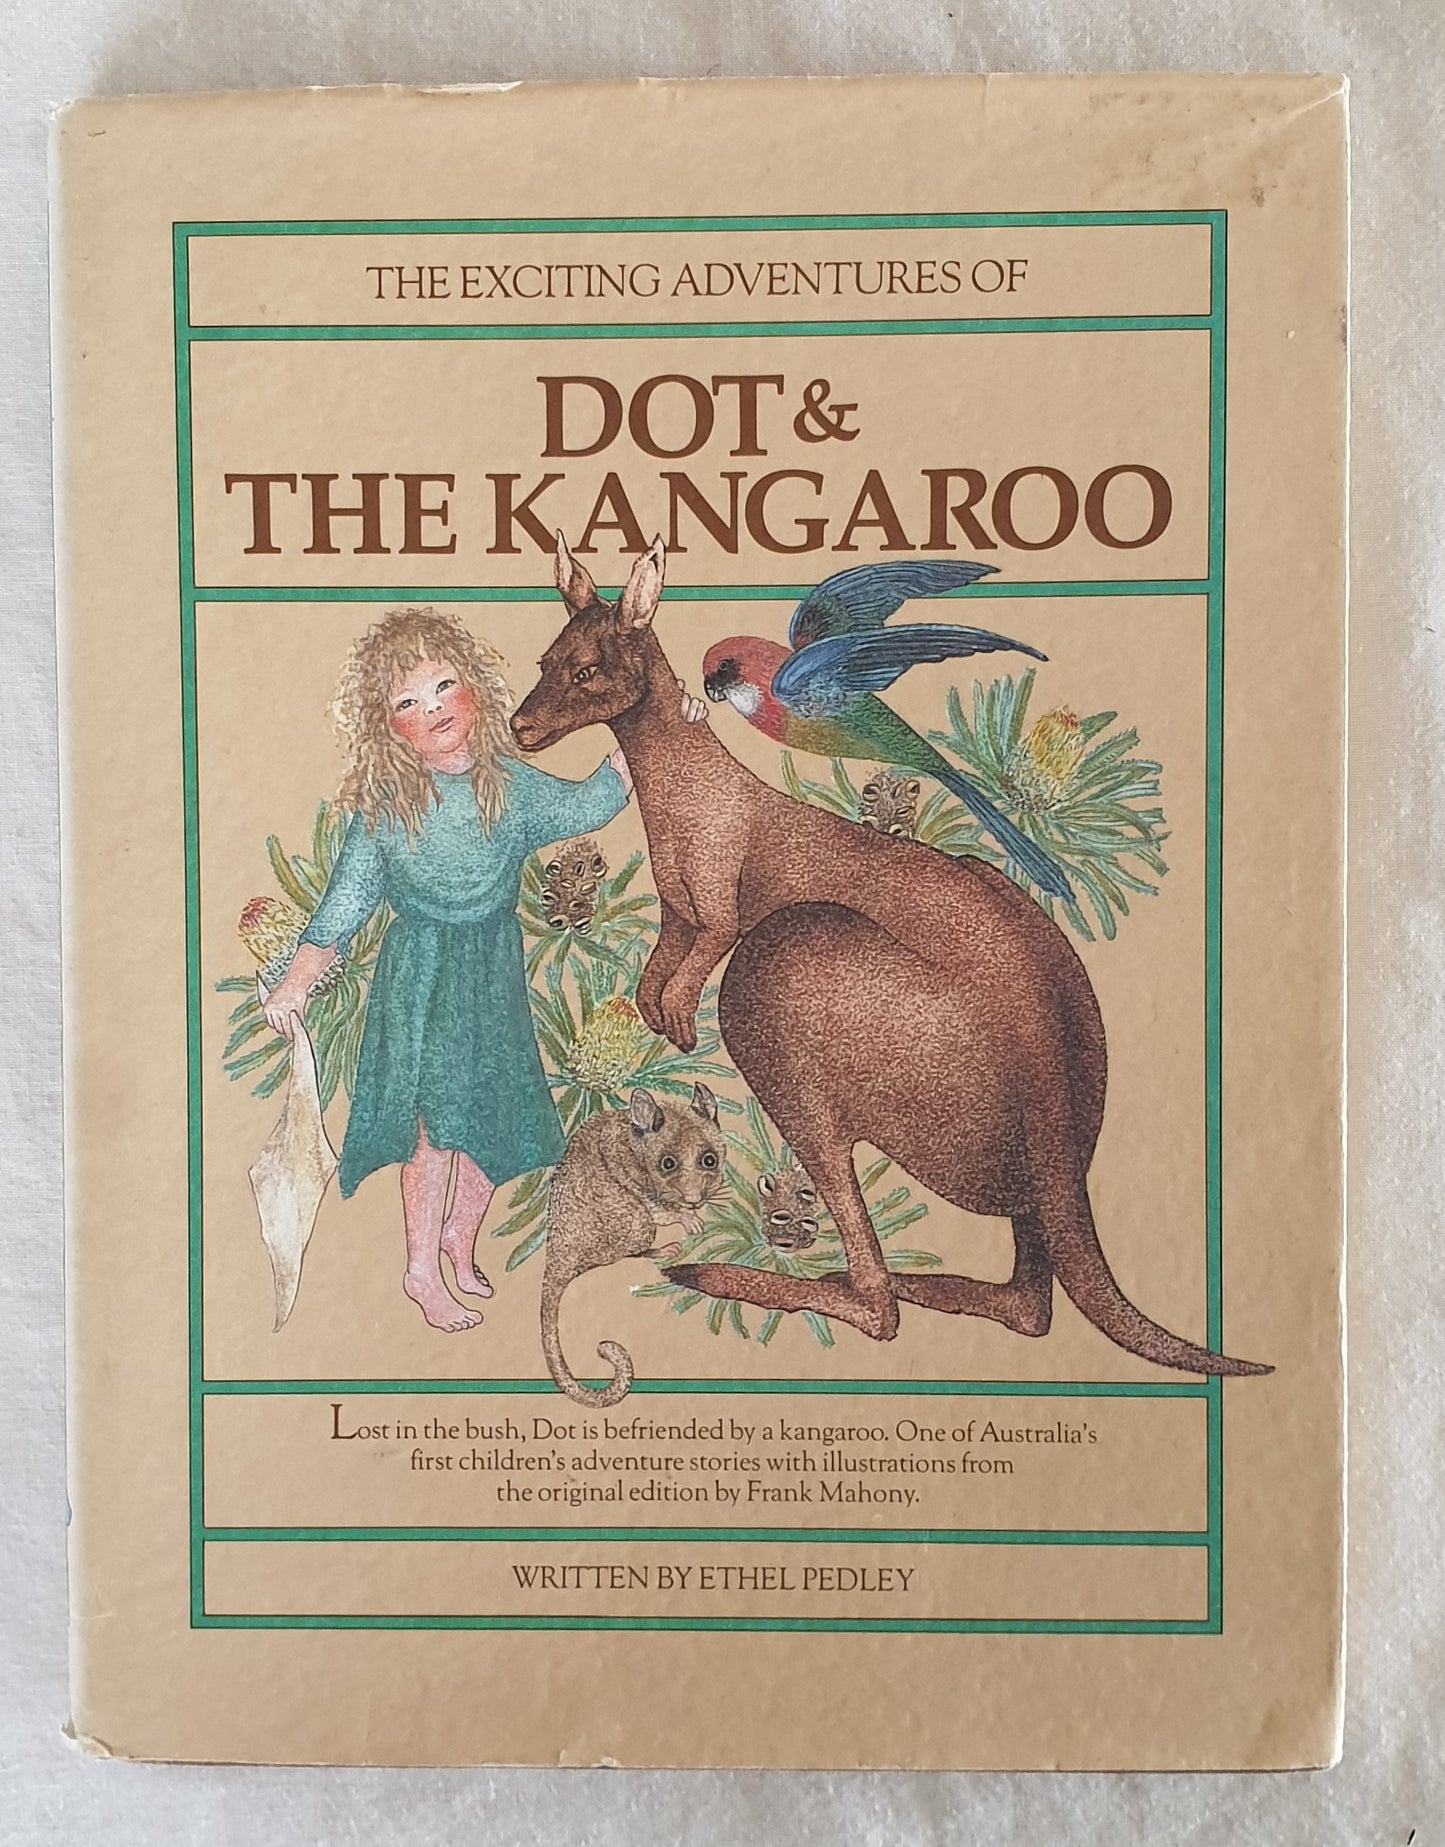 Dot & The Kangaroo by Ethel Pedley